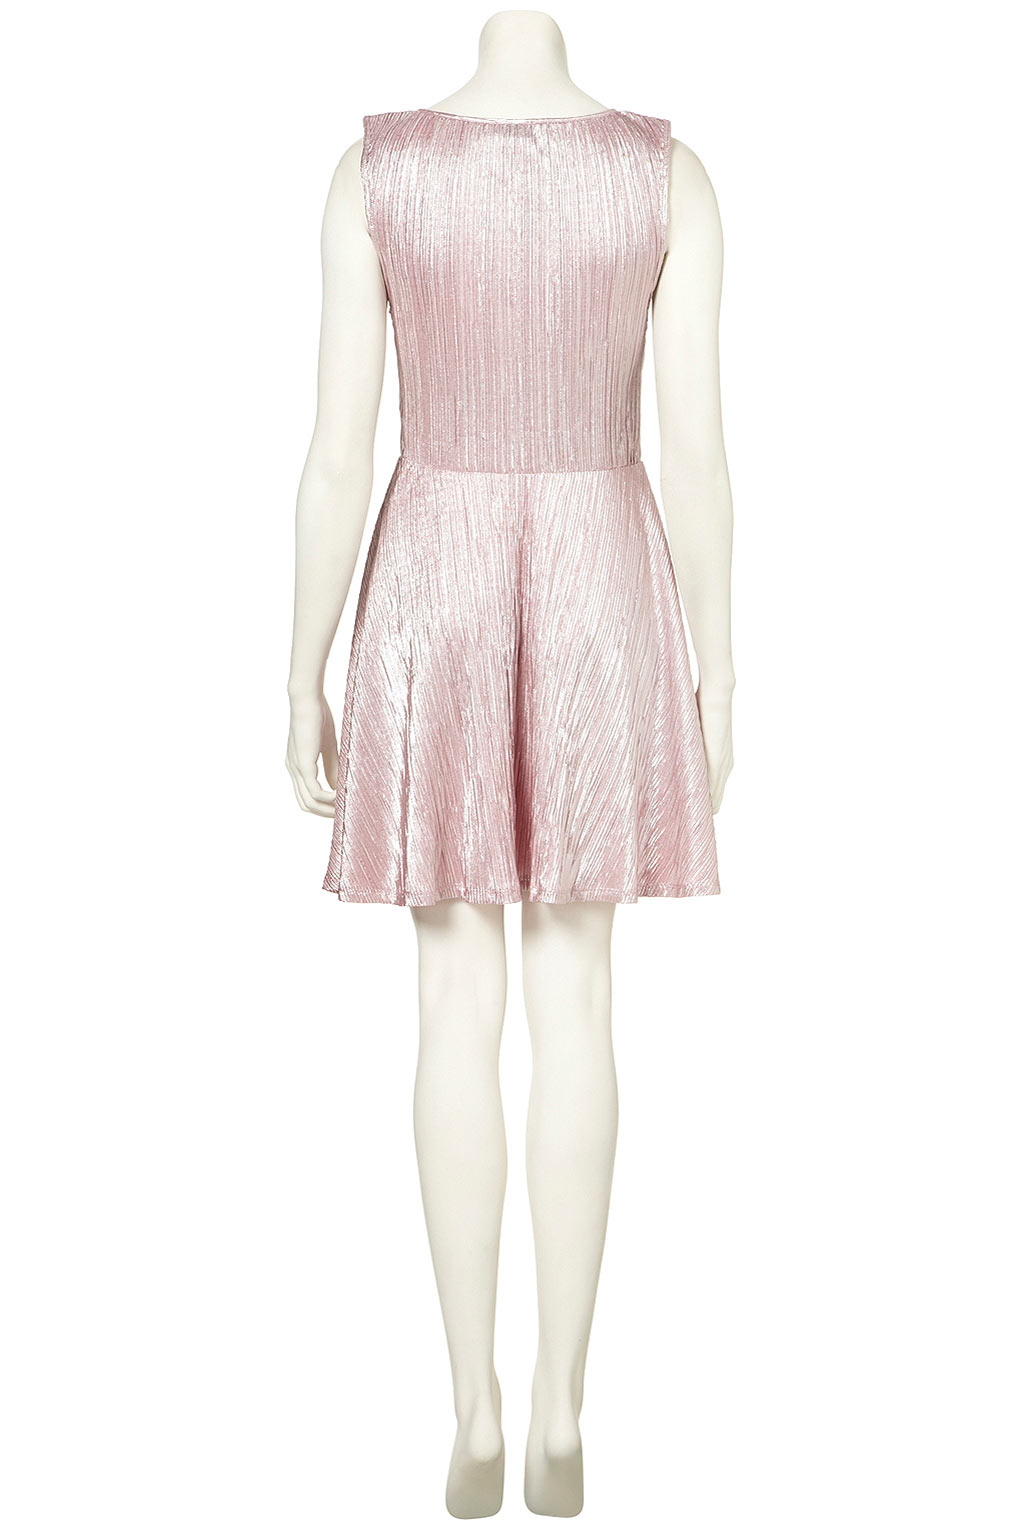 Lyst - Topshop Metallic Pleat Tunic Dress in Pink